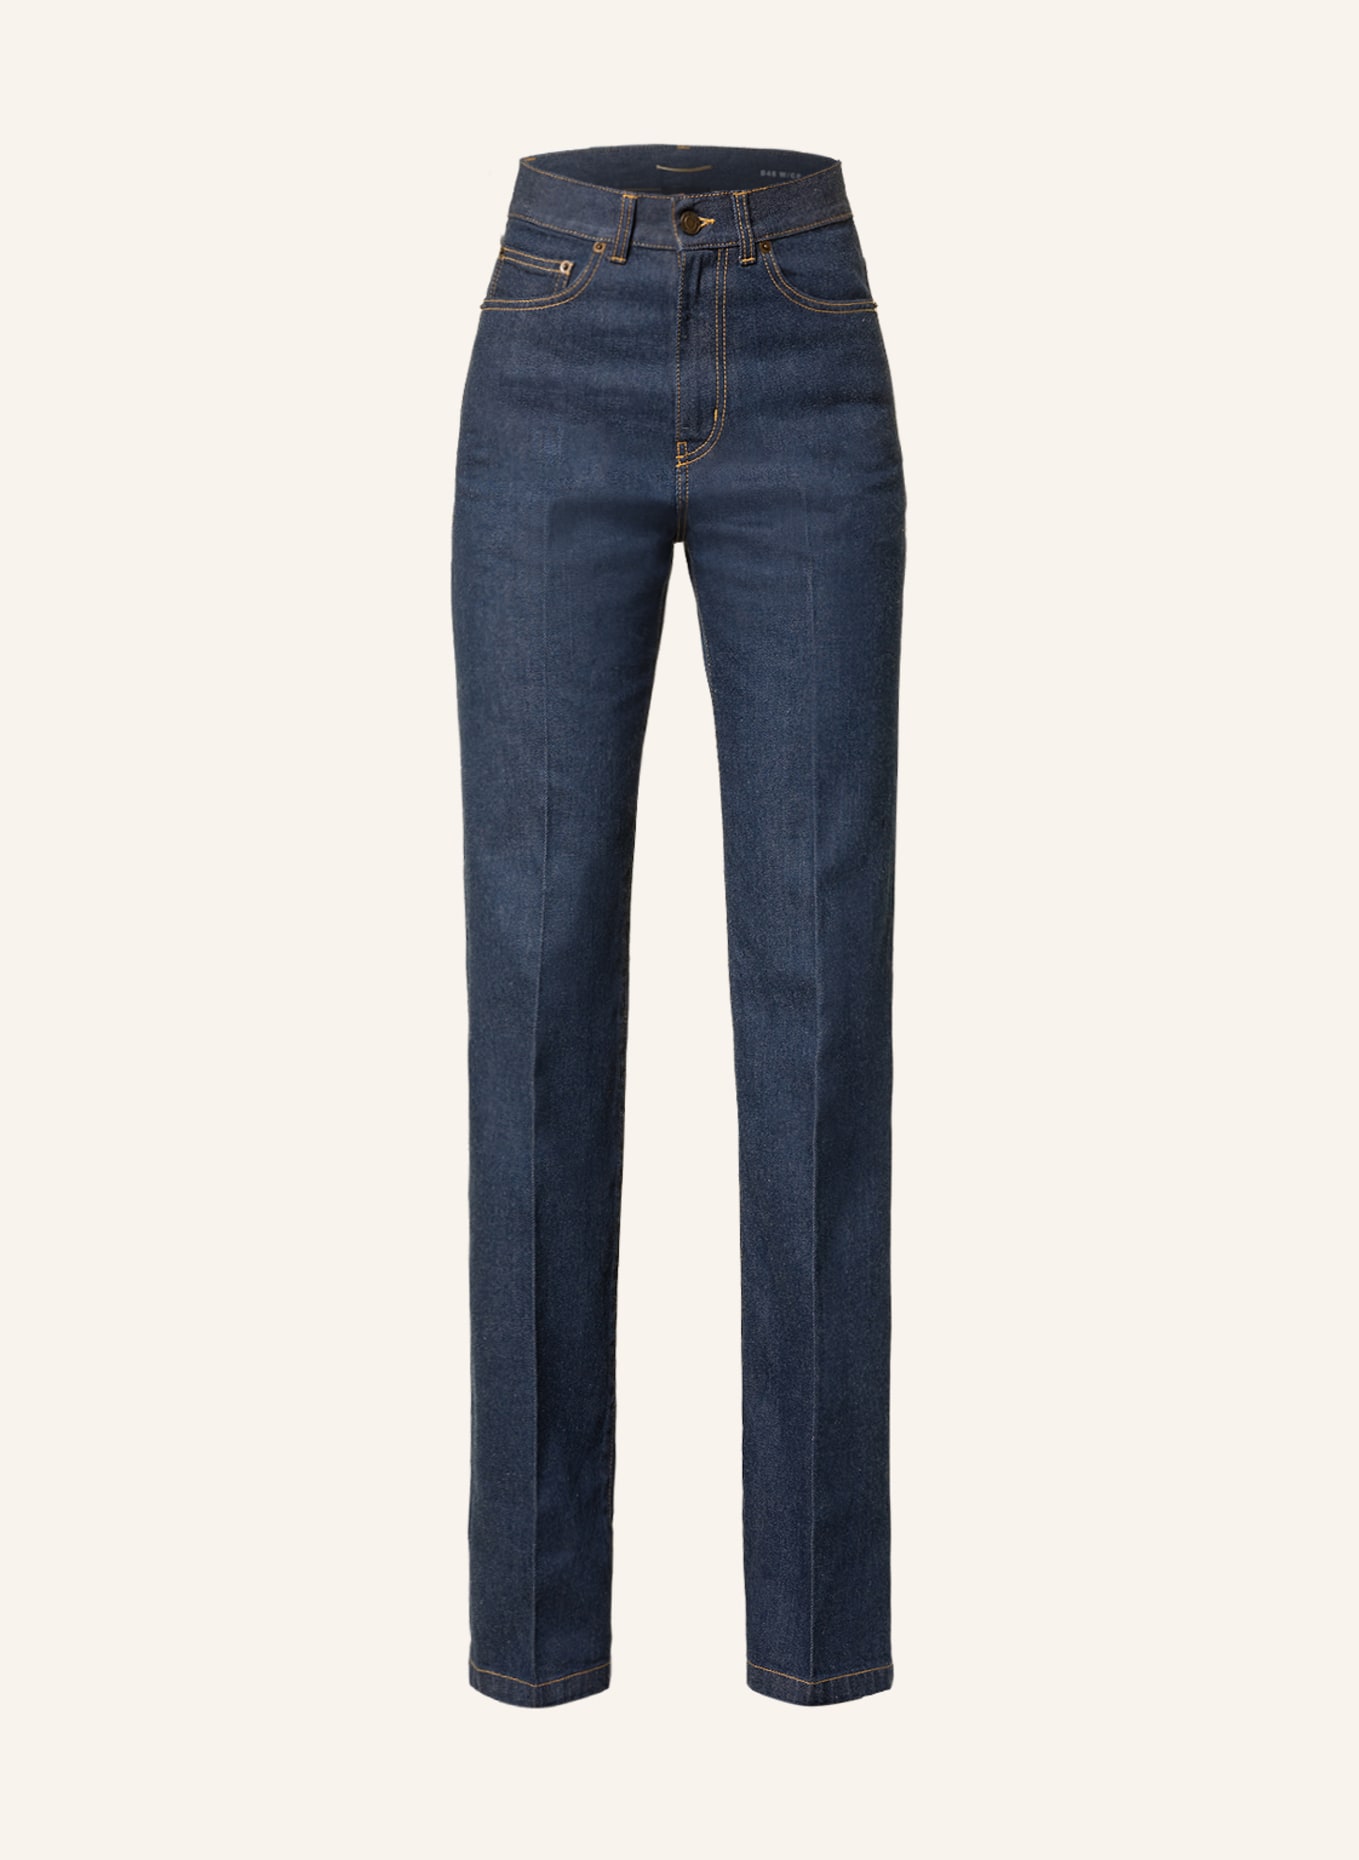 SAINT LAURENT Jeans CLYDE, Farbe: 4127 MEDIUM BLUE RINSE (Bild 1)